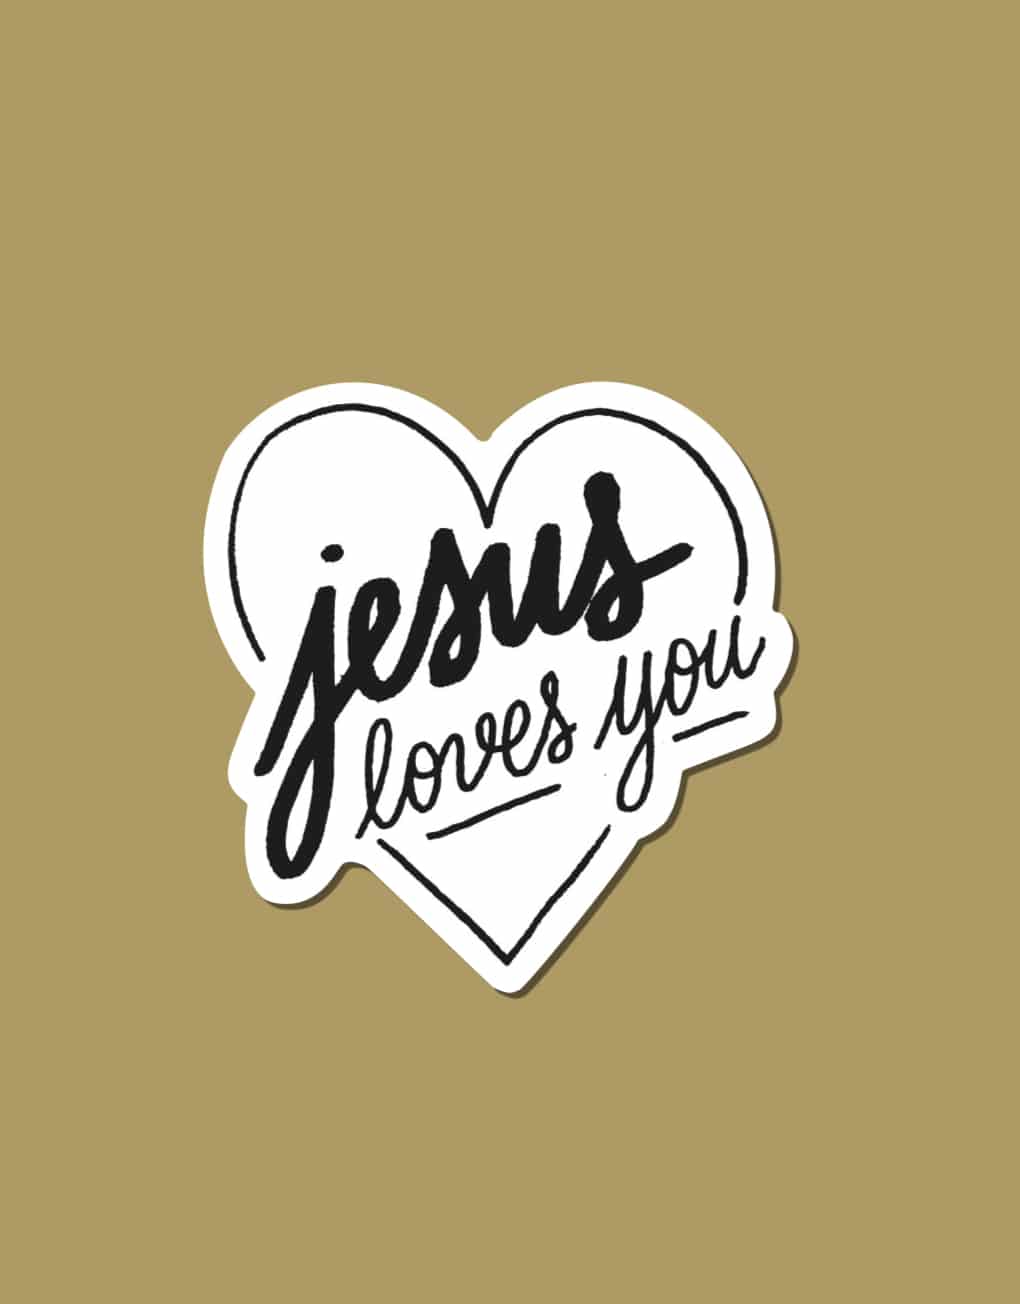 https://www.cathoretro.com/wp-content/uploads/2021/01/Sticker_autocollant_catholique_CathoRetro_jesus_loves_you-1.jpg